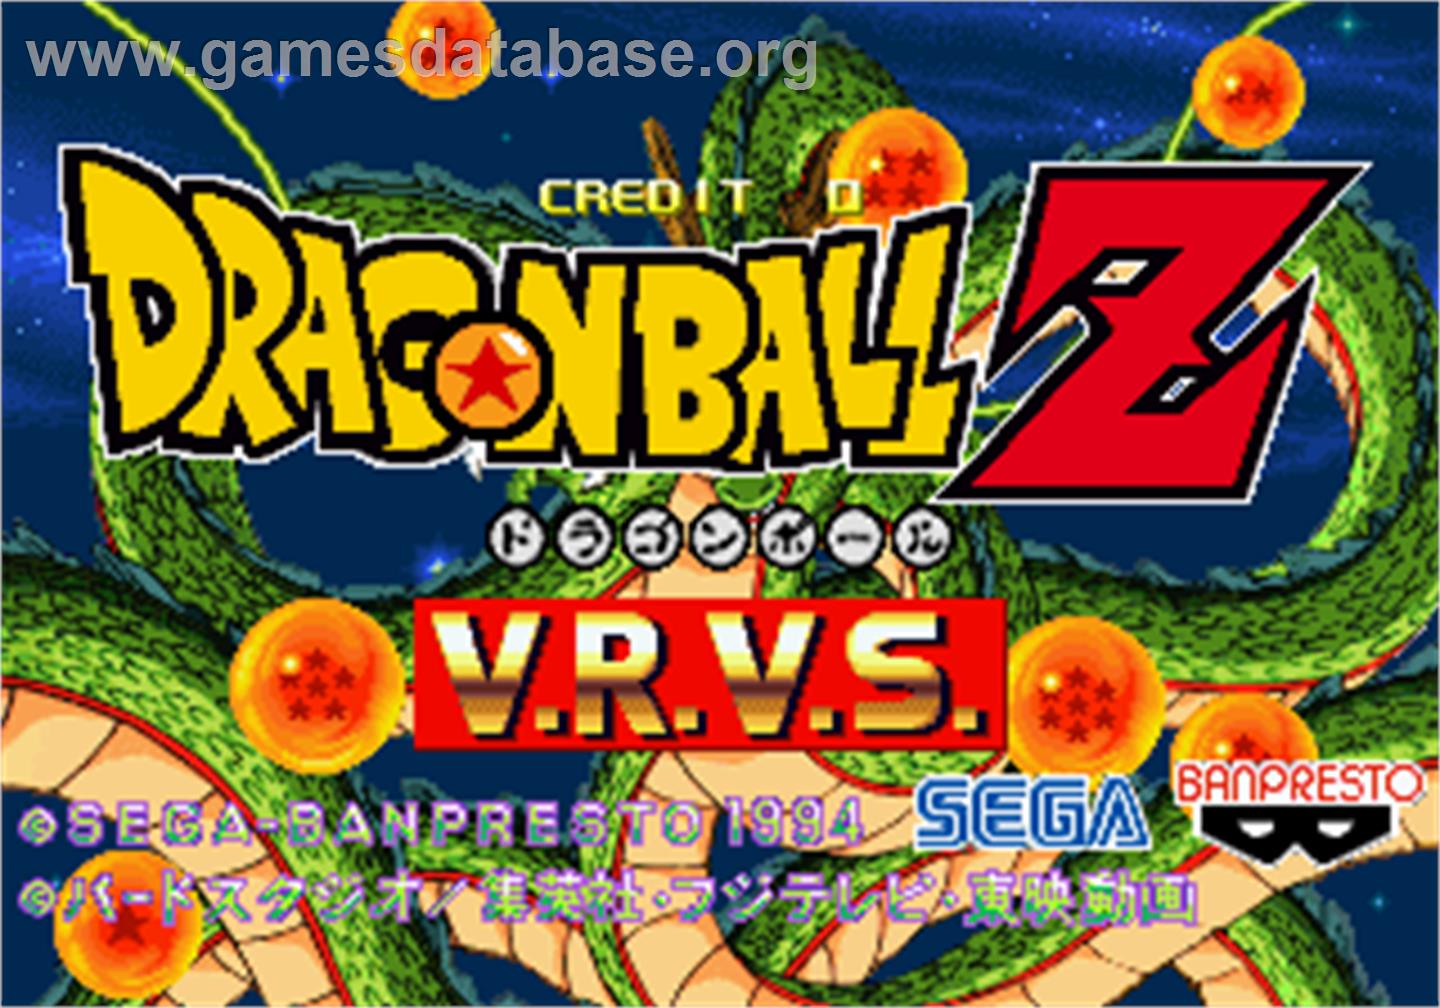 Dragon Ball Z V.R.V.S. - Arcade - Artwork - Title Screen